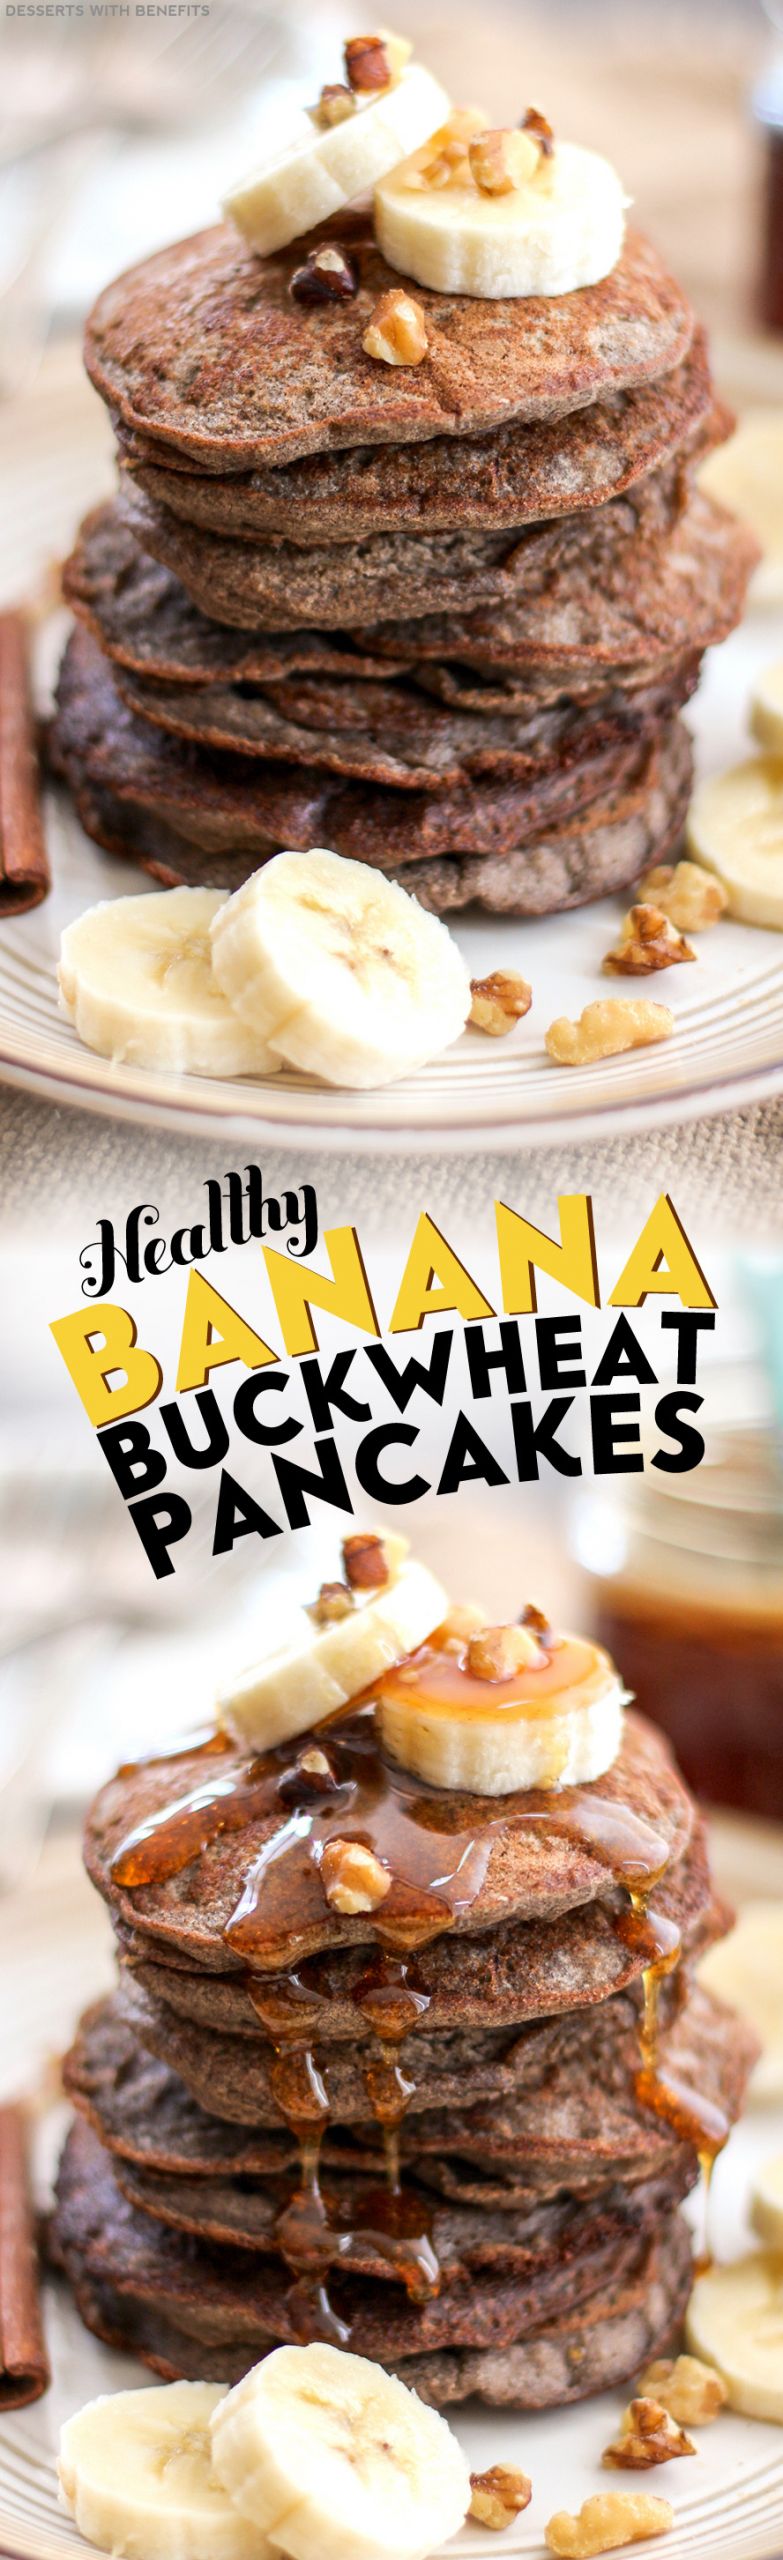 Healthy Low Fat Desserts
 Healthy Banana Buckwheat Pancakes Recipe low fat gluten